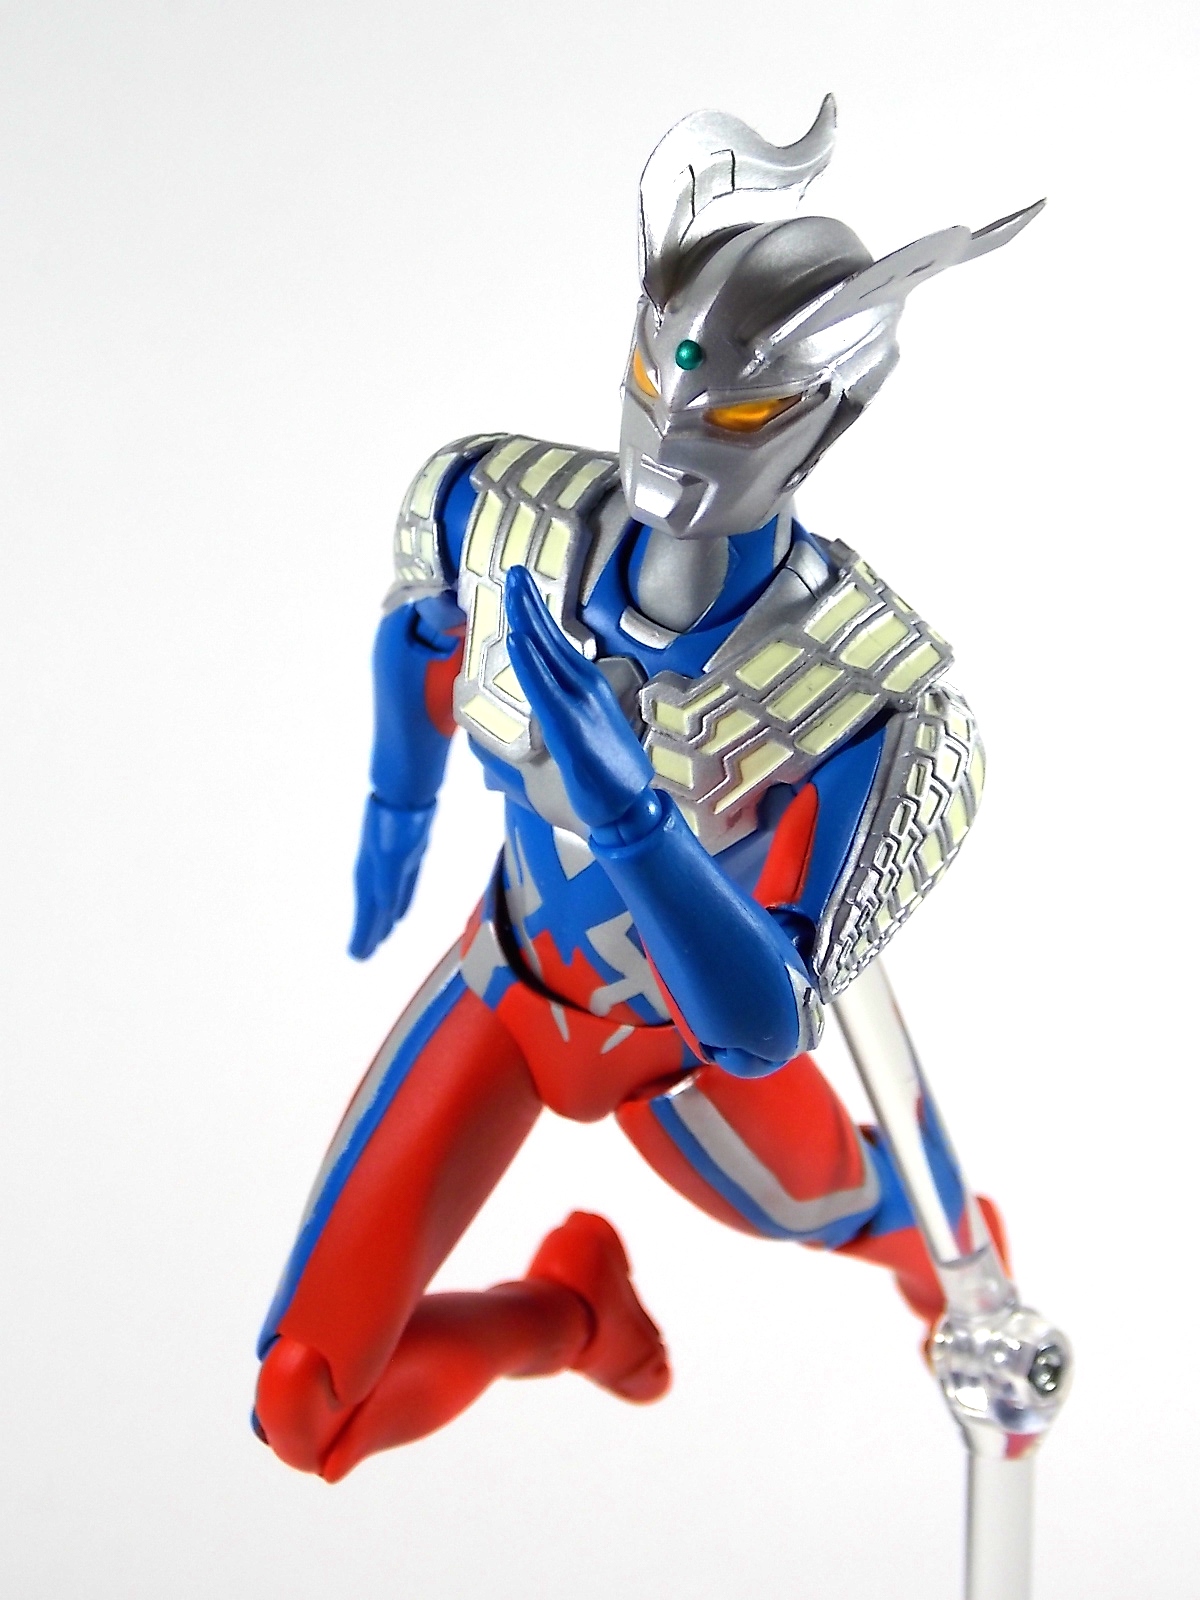 Ultra Act Ultraman Zero V2 Gallery Tokunation